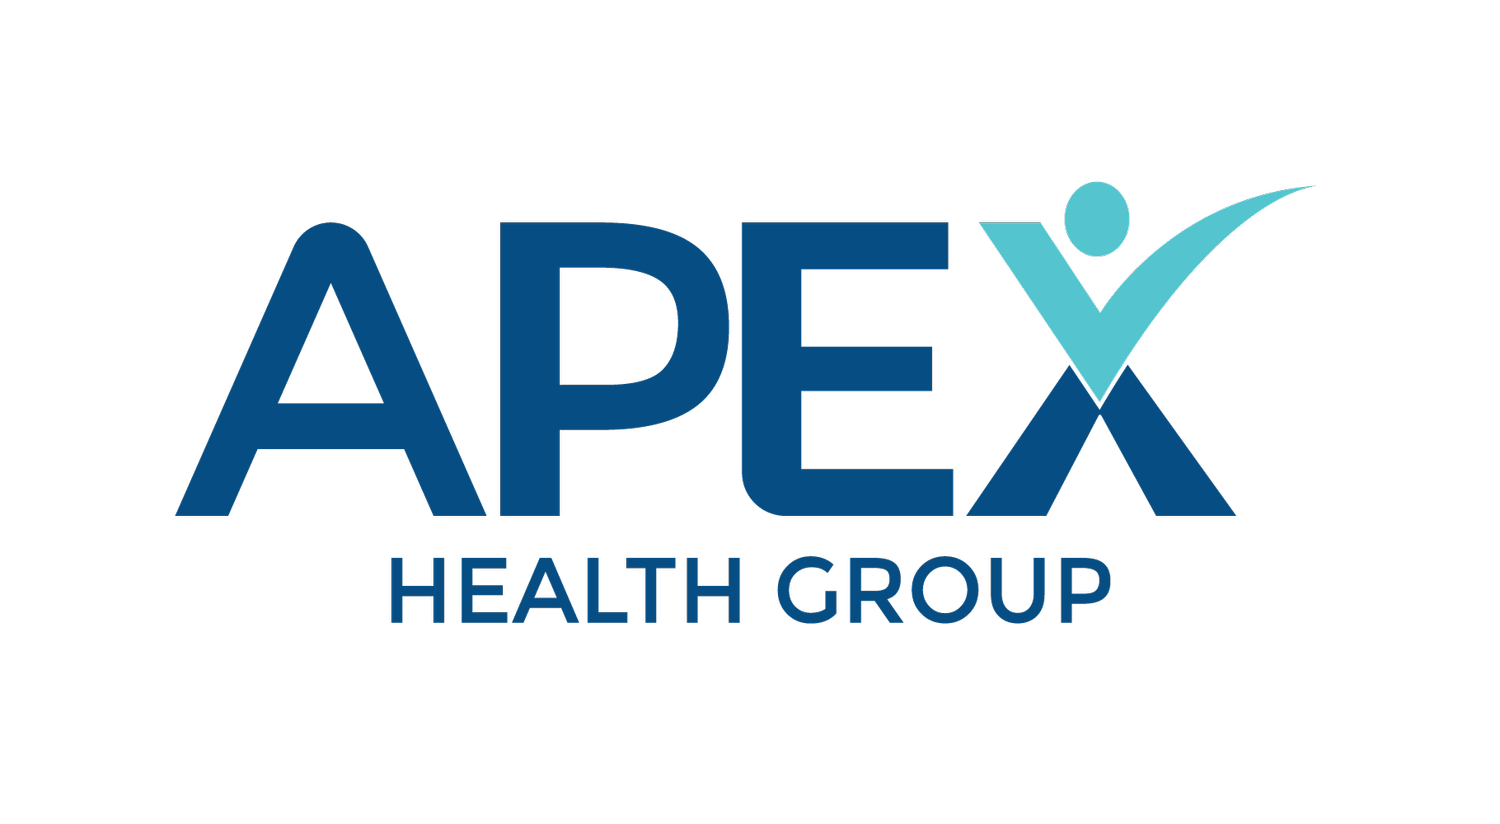 Apex Health Group